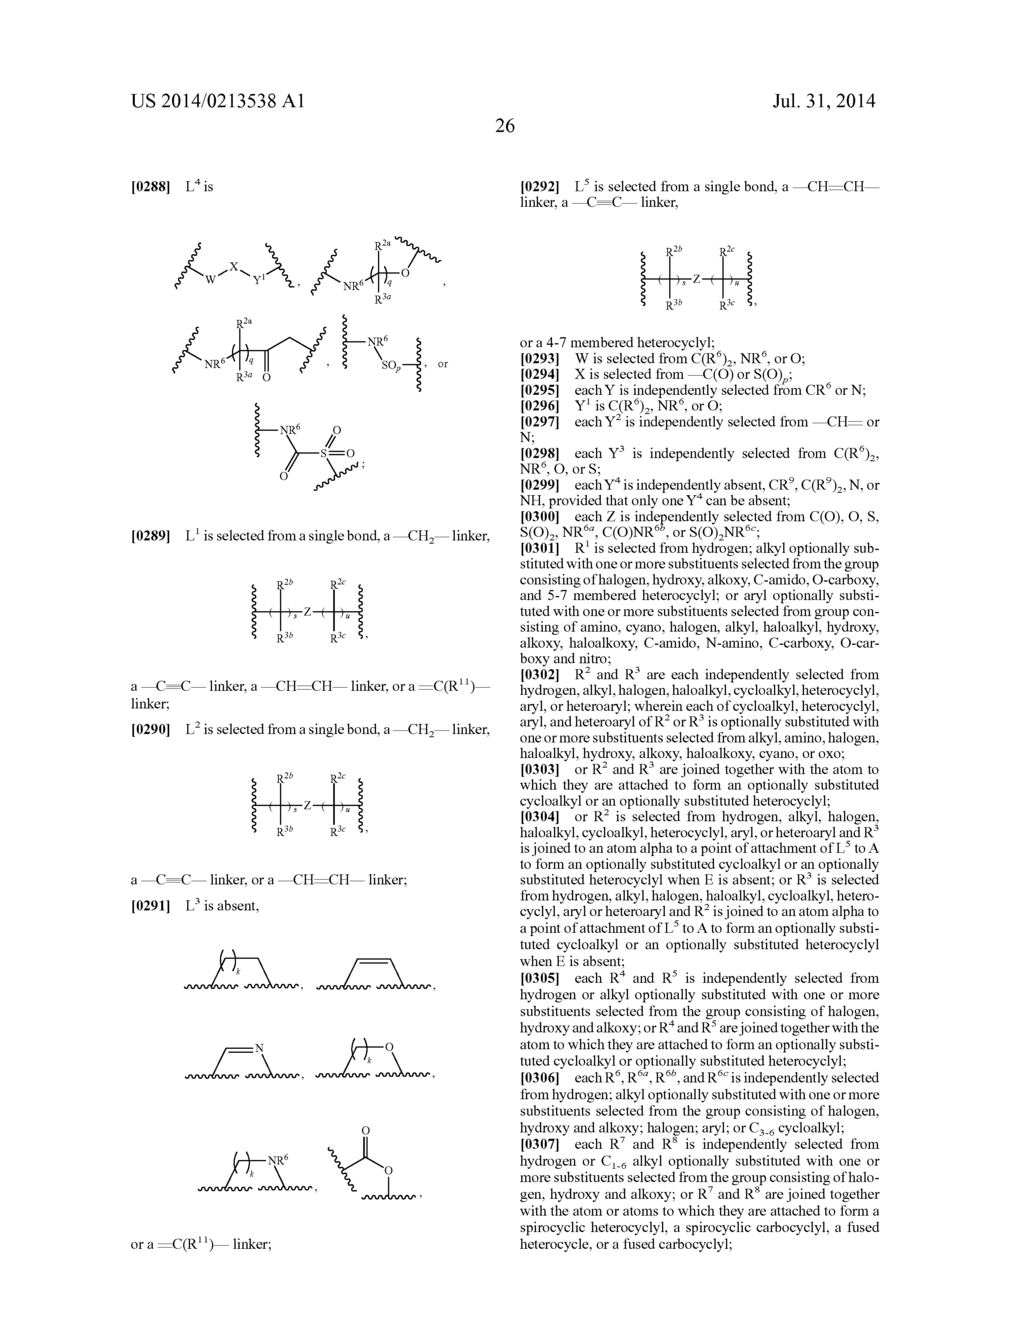 LYSOPHOSPHATIDIC ACID RECEPTOR ANTAGONISTS - diagram, schematic, and image 27